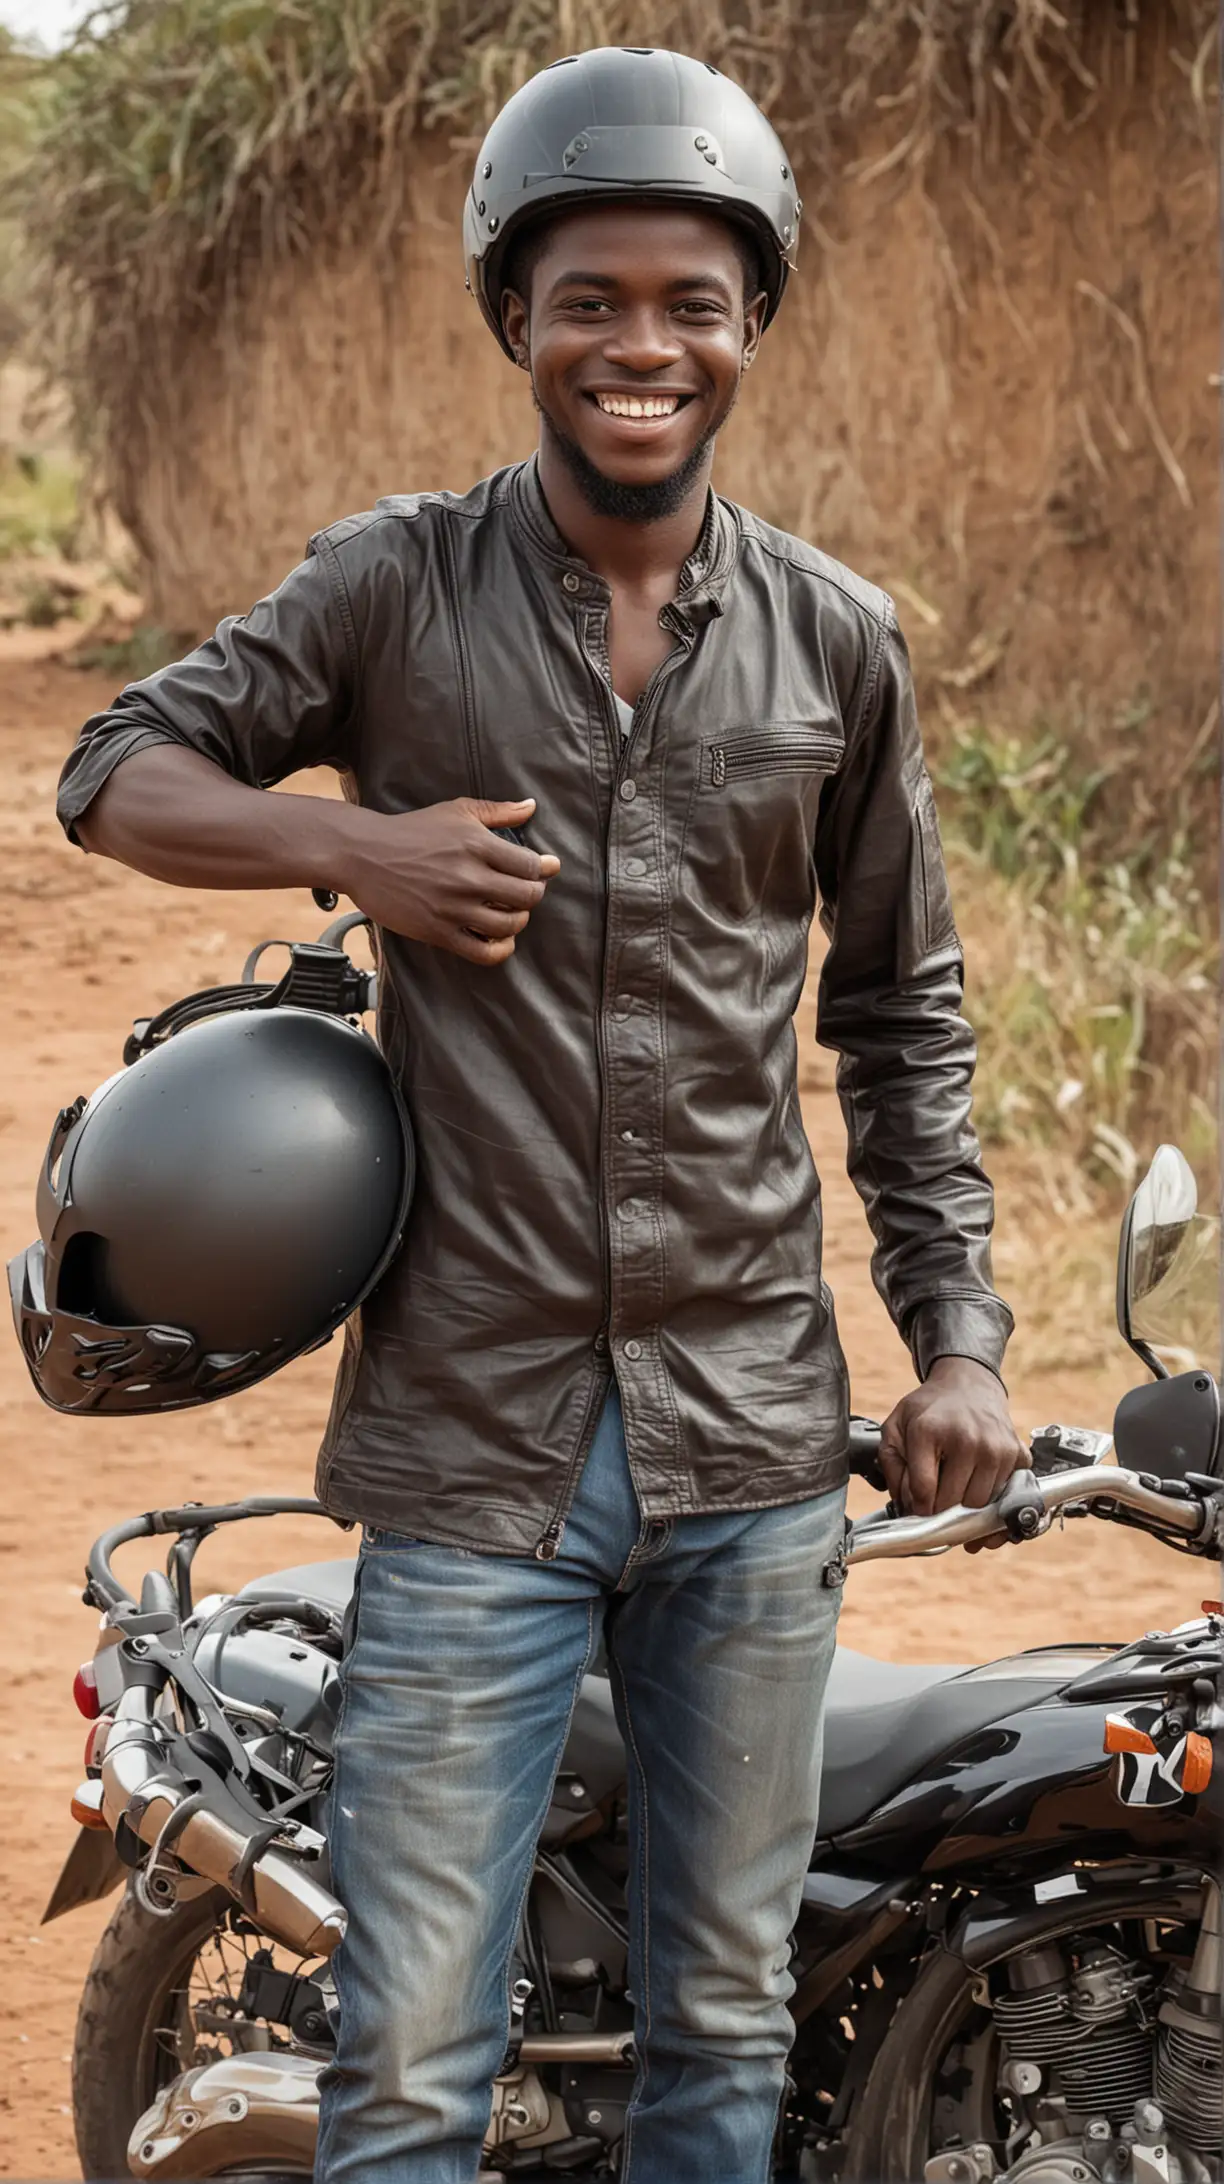 smiling African motorbike rider standing holding his helmet no bike

